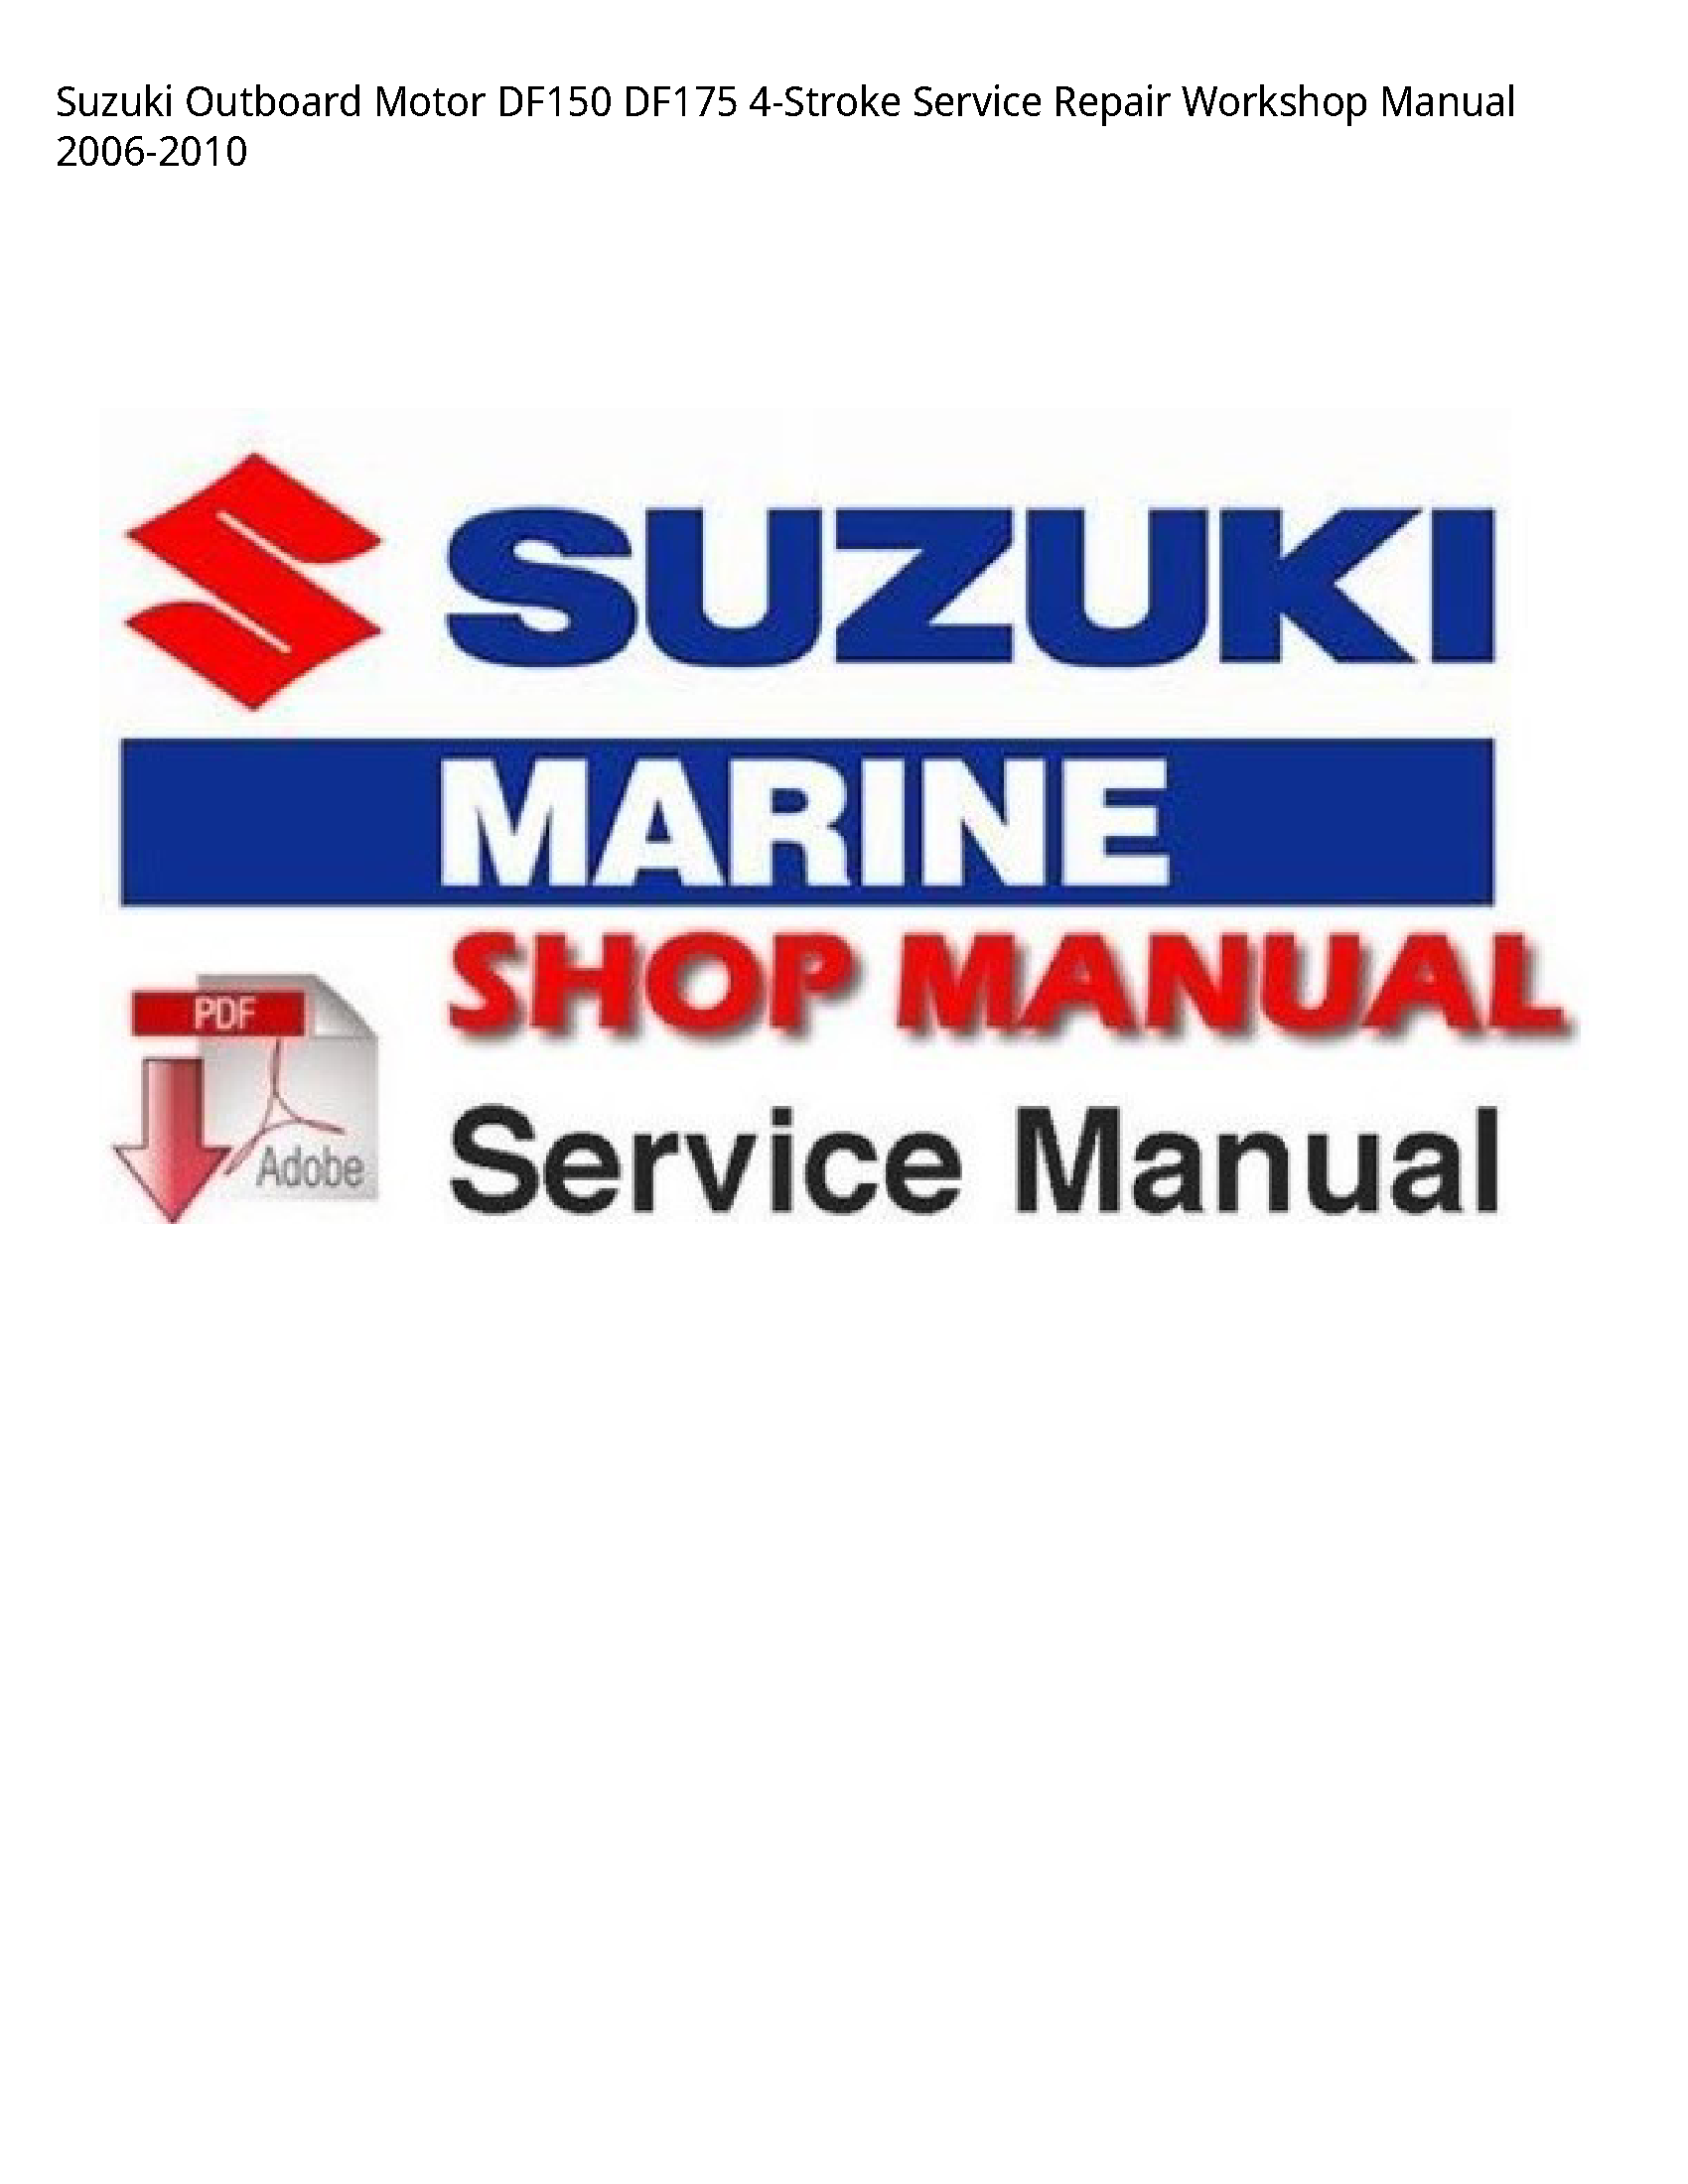 Suzuki DF150 Outboard Motor manual